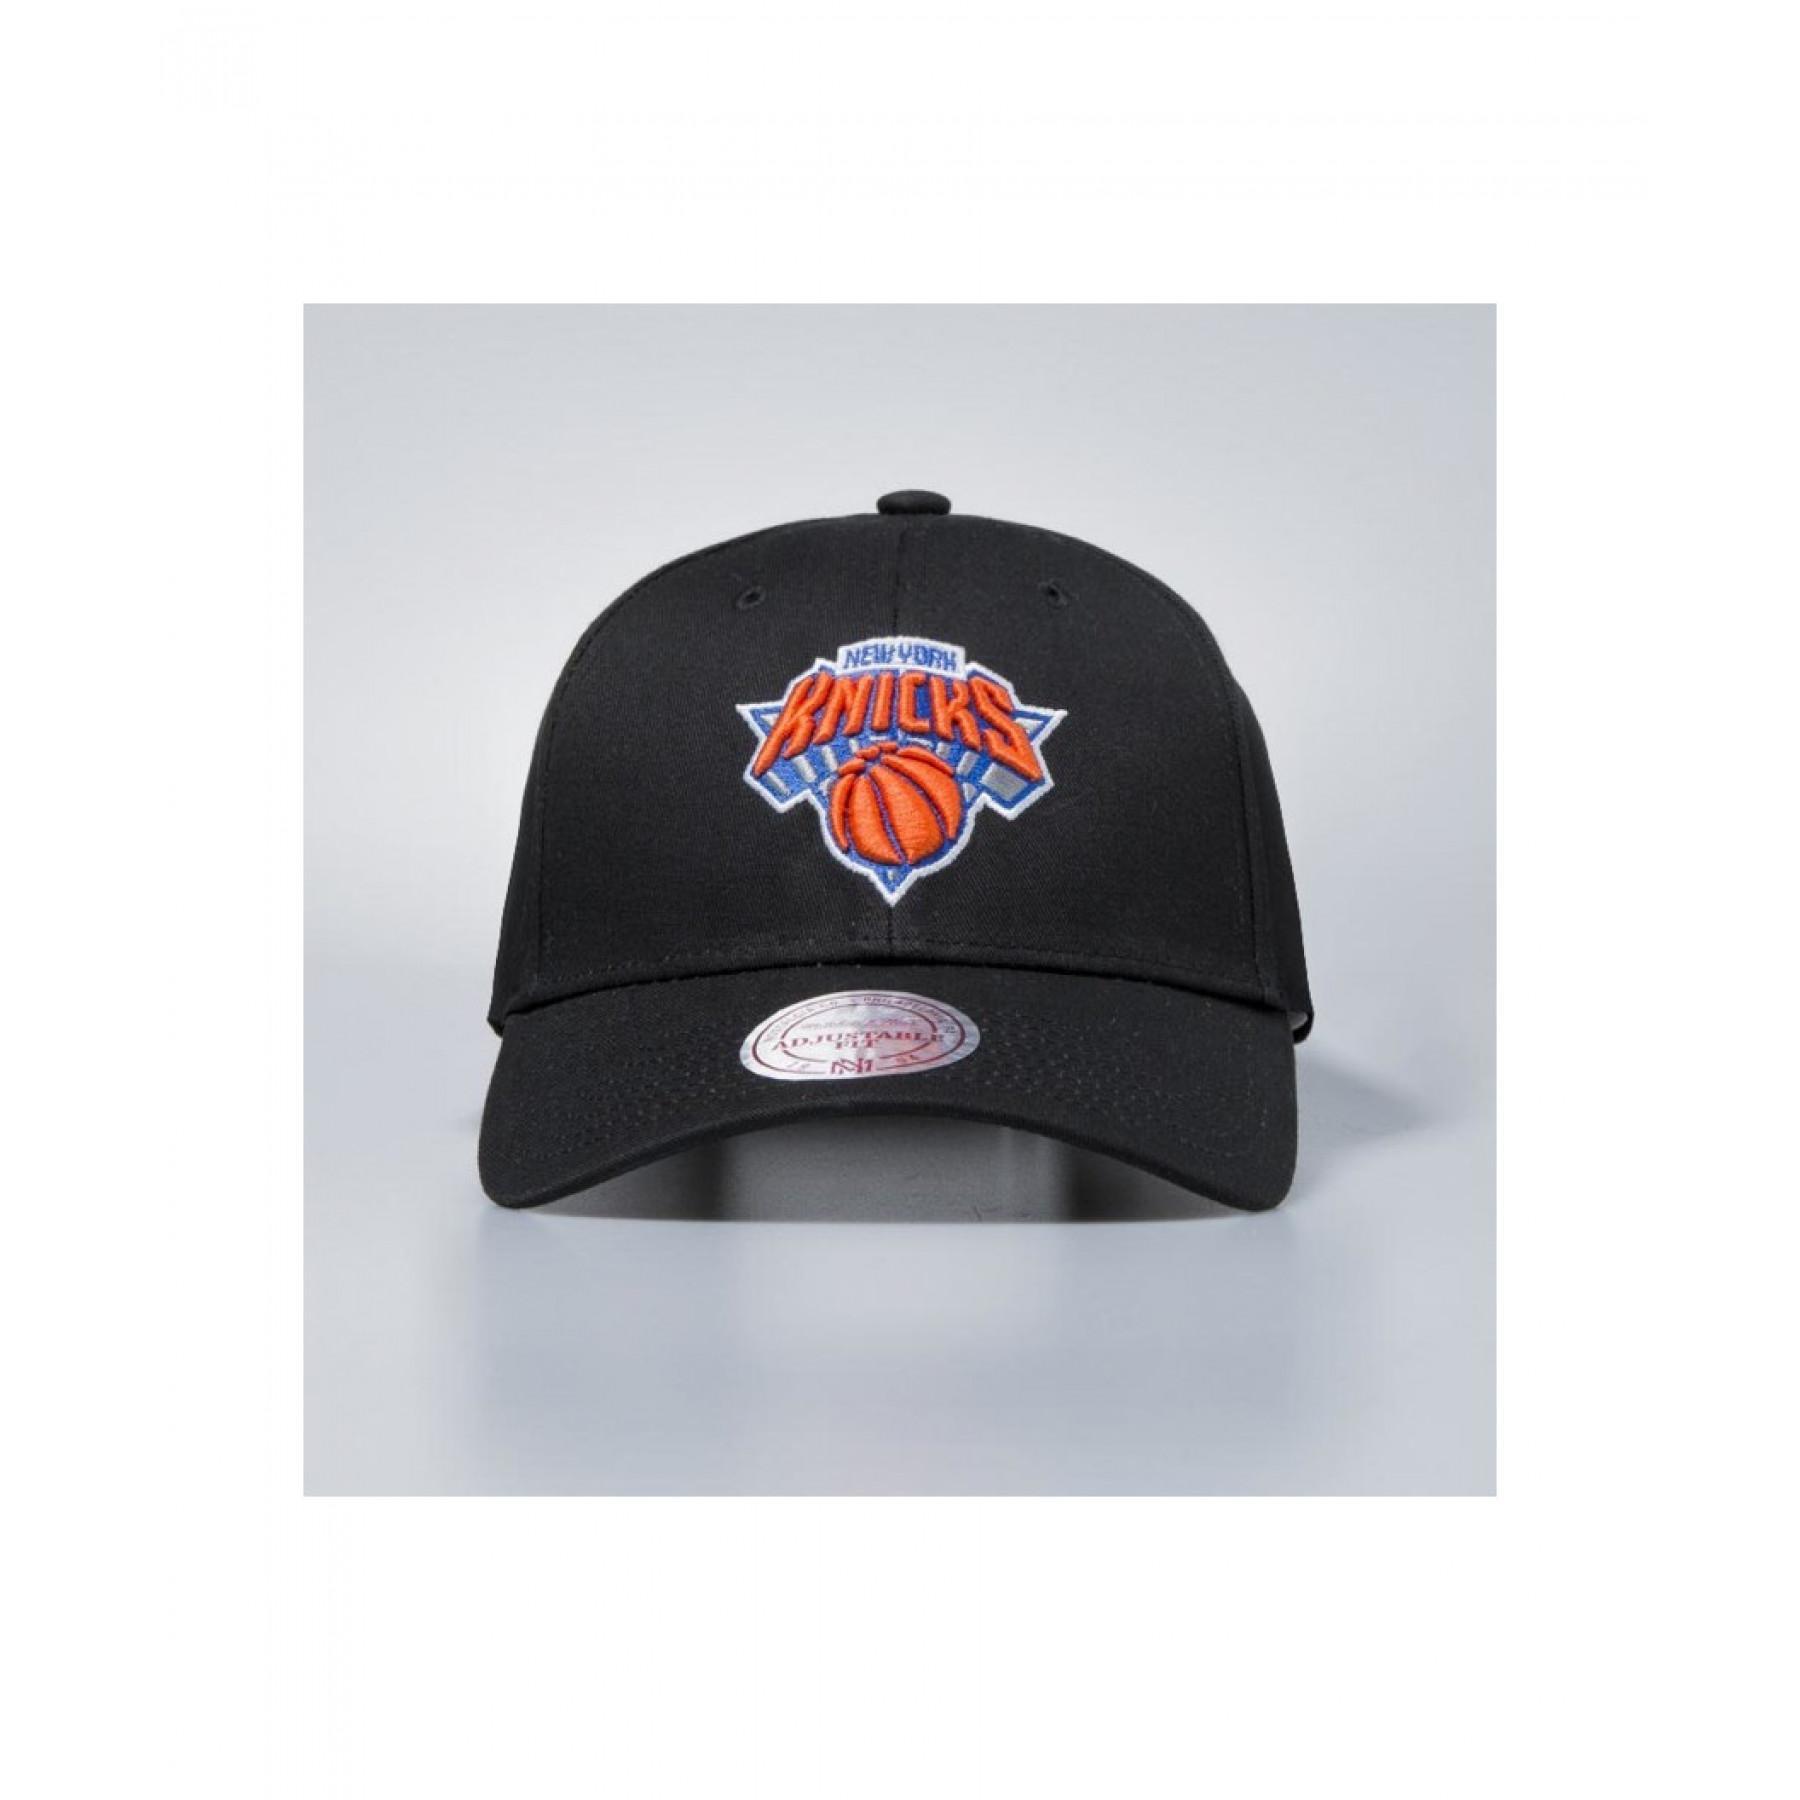 Gorra New York Knicks team logo